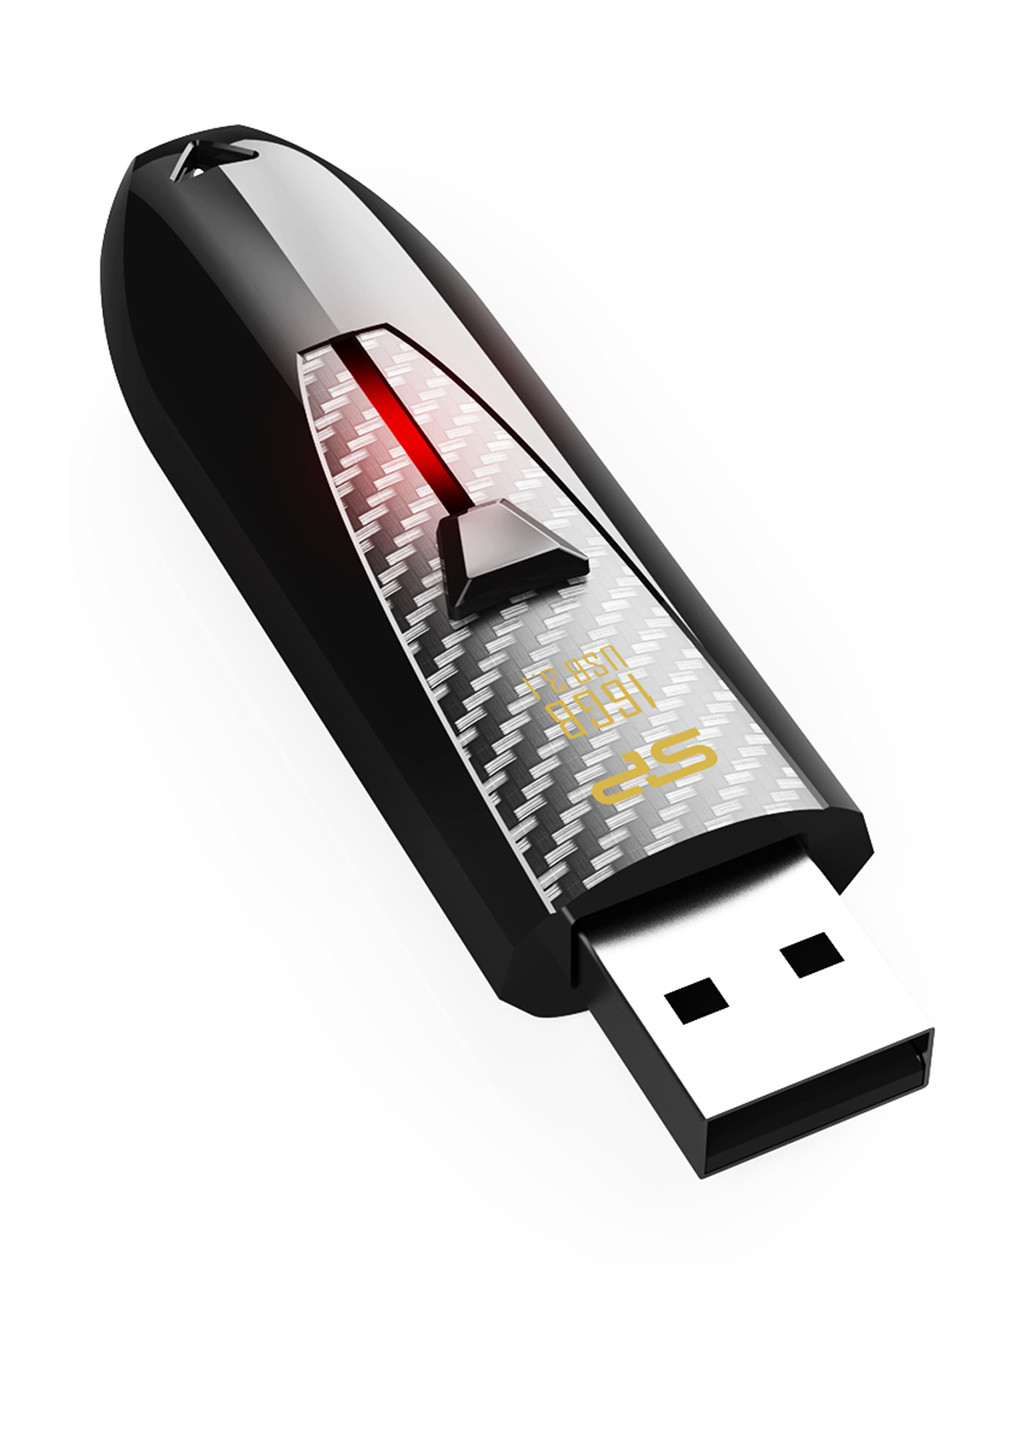 Флеш память USB Blaze B25 16GB USB 3.0 Black (SP016GBUF3B25V1K) Silicon Power флеш память usb silicon power blaze b25 16gb usb 3.0 black (sp016gbuf3b25v1k) (130221132)